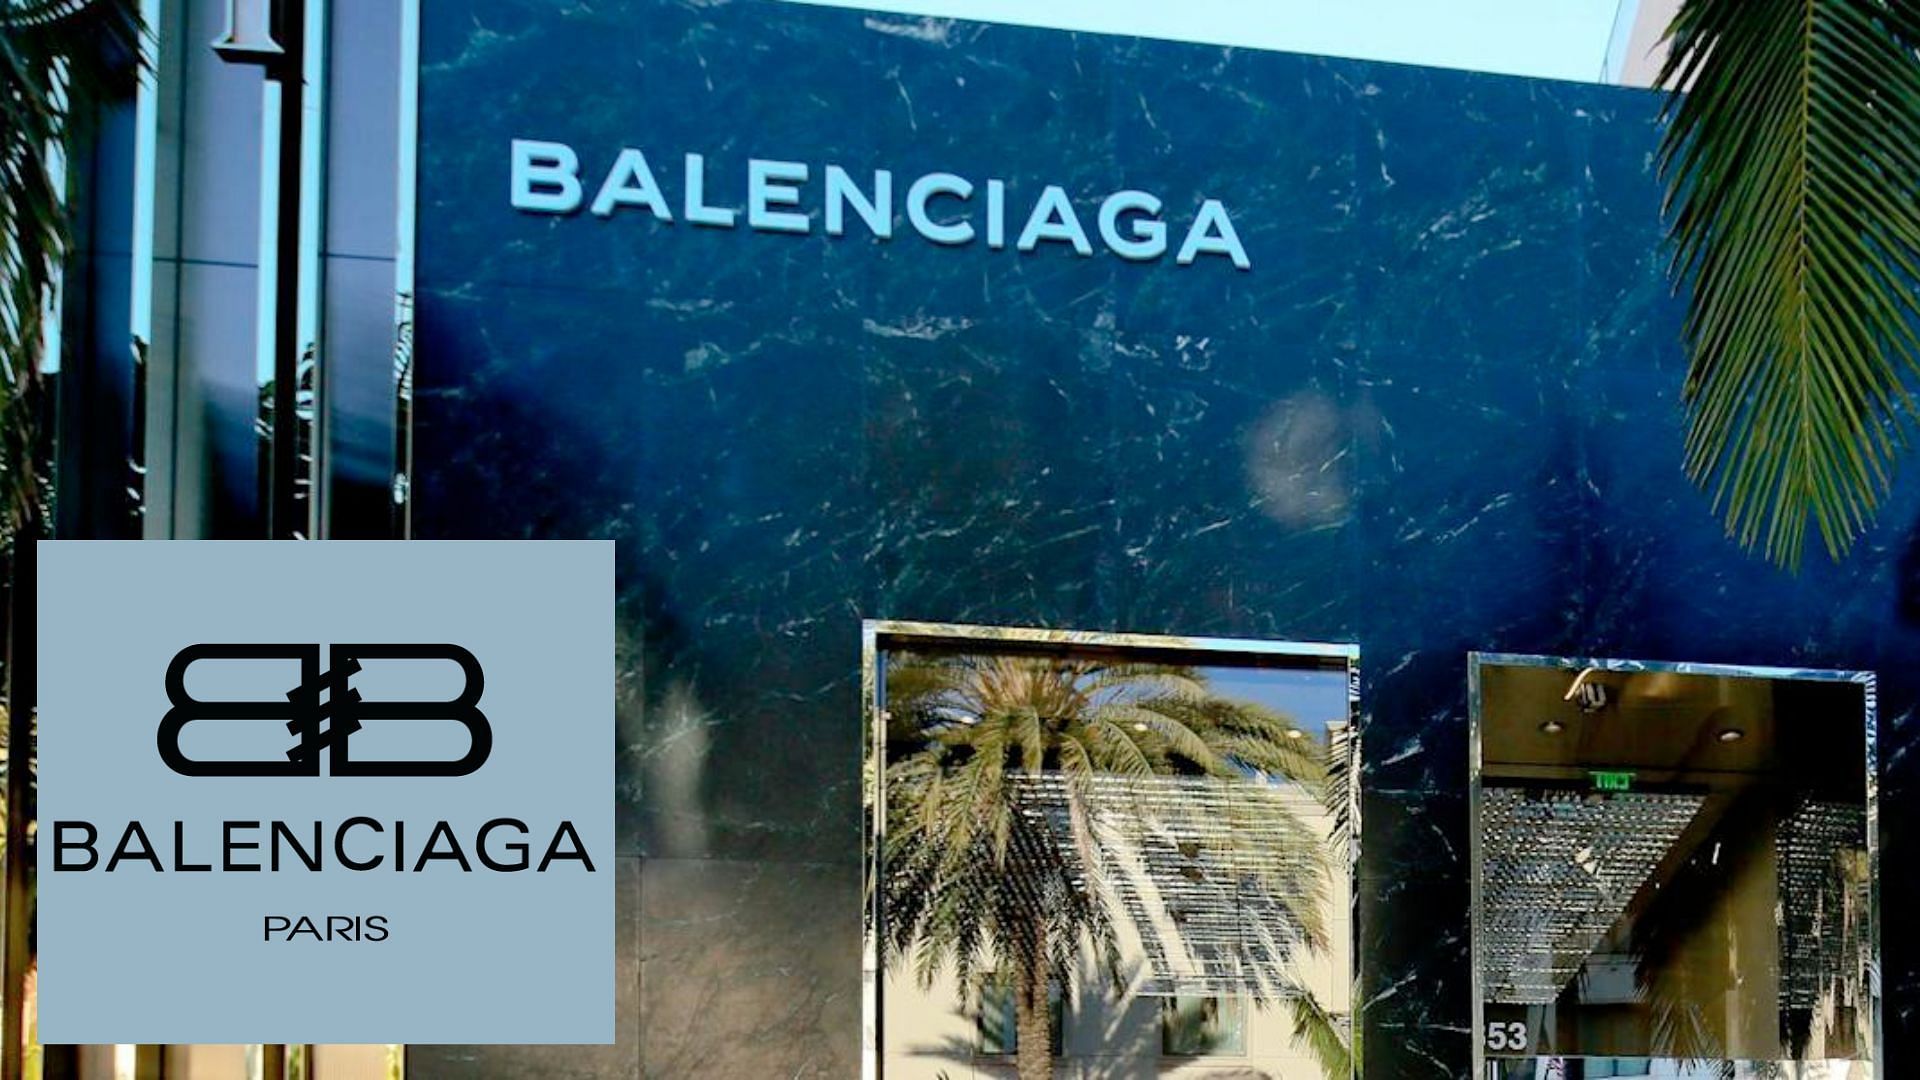 Balenciaga sues production company and set designer for reputational damage (image via Balenciaga)